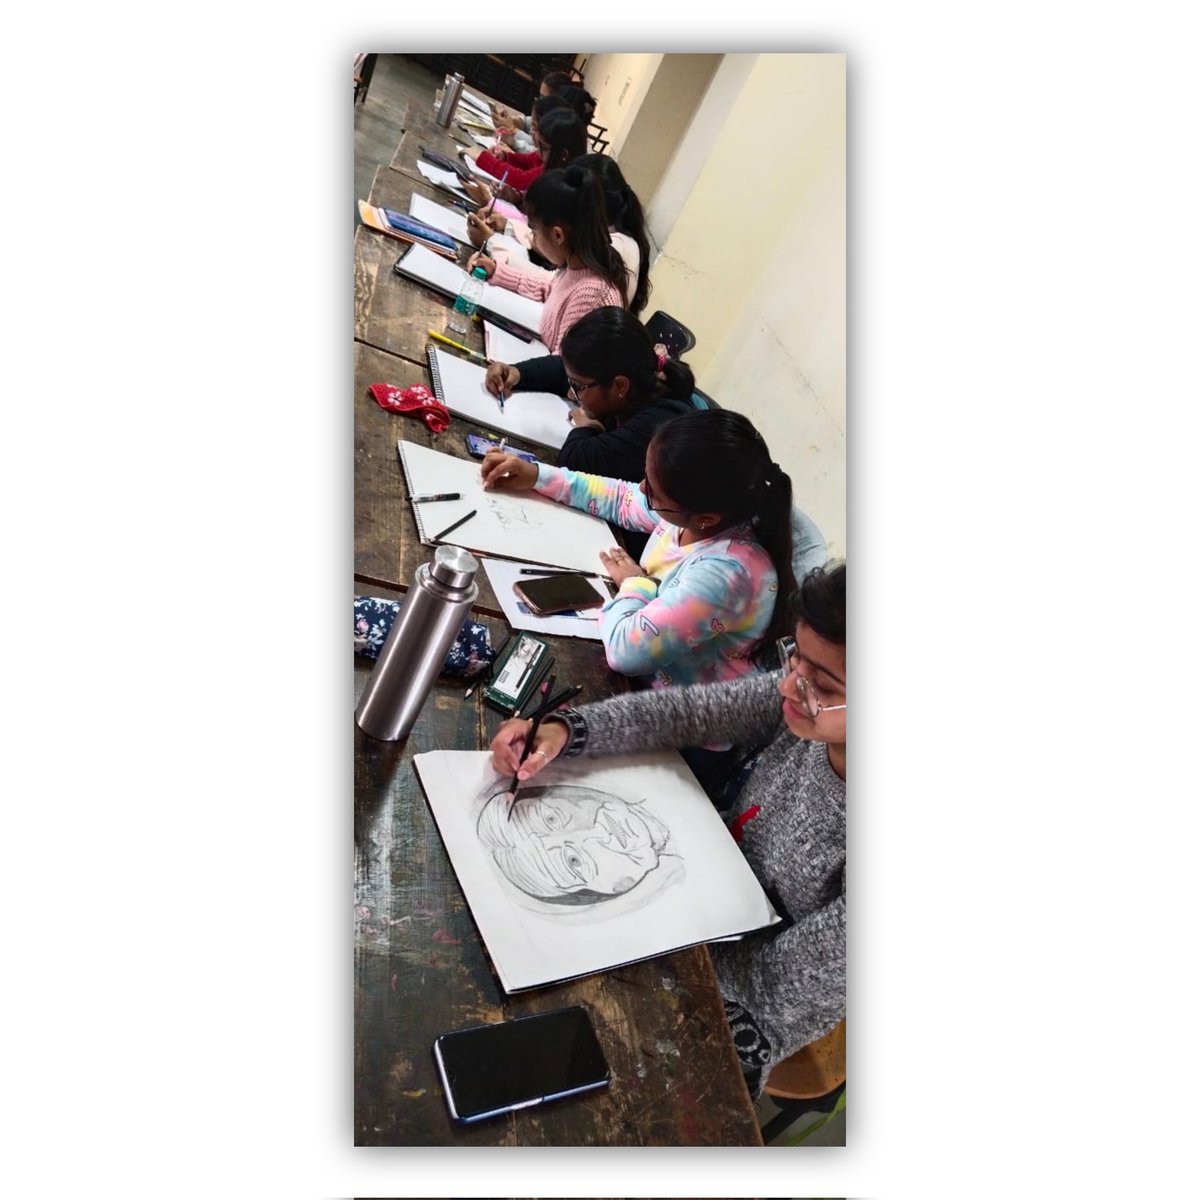 Classroom Fun and Learning at Satyam Fashion Institute, Noida. 
. 
. 
#learning #Classroom #Fashionstudents #Bdes #Fashion #Funactivities #sketching #Design 
. 
. 
. 
#fashiondesign #textiledesign #lifestyleandaccessories #fashioncommunication #satyamfashioninstitute #satyamnoida